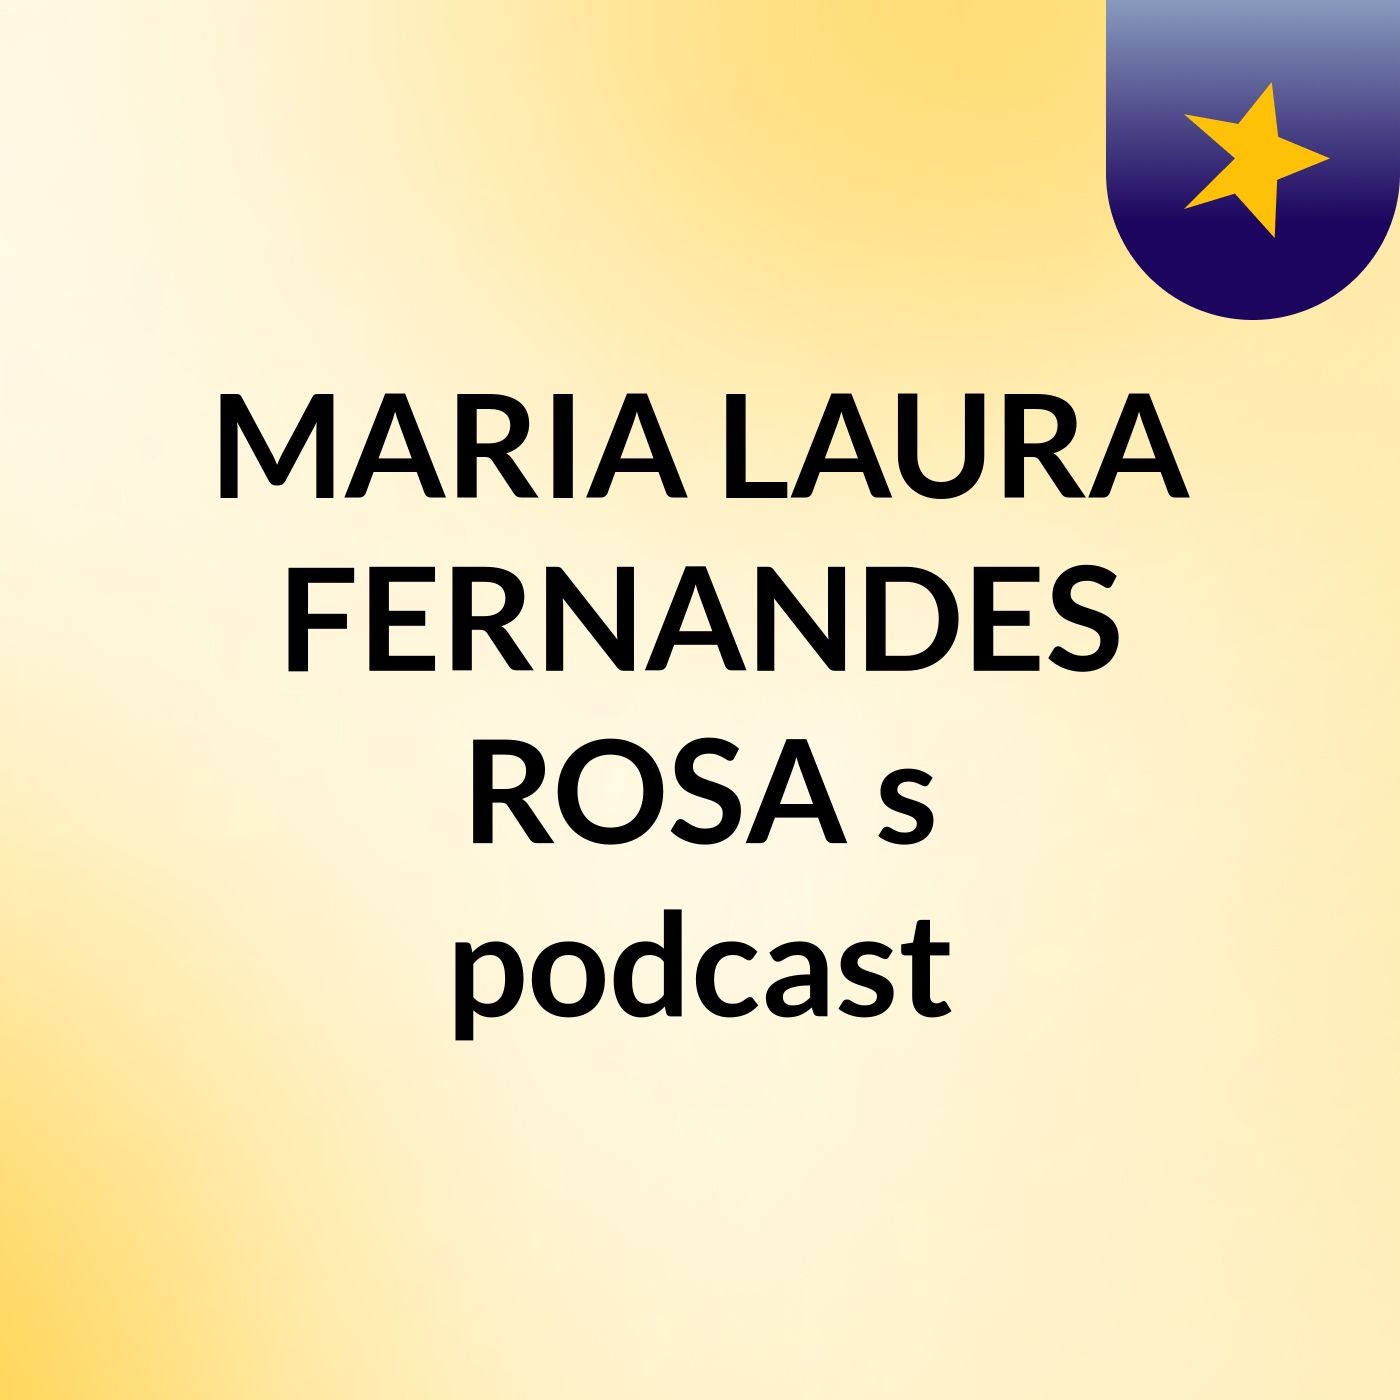 MARIA LAURA FERNANDES ROSA's podcast